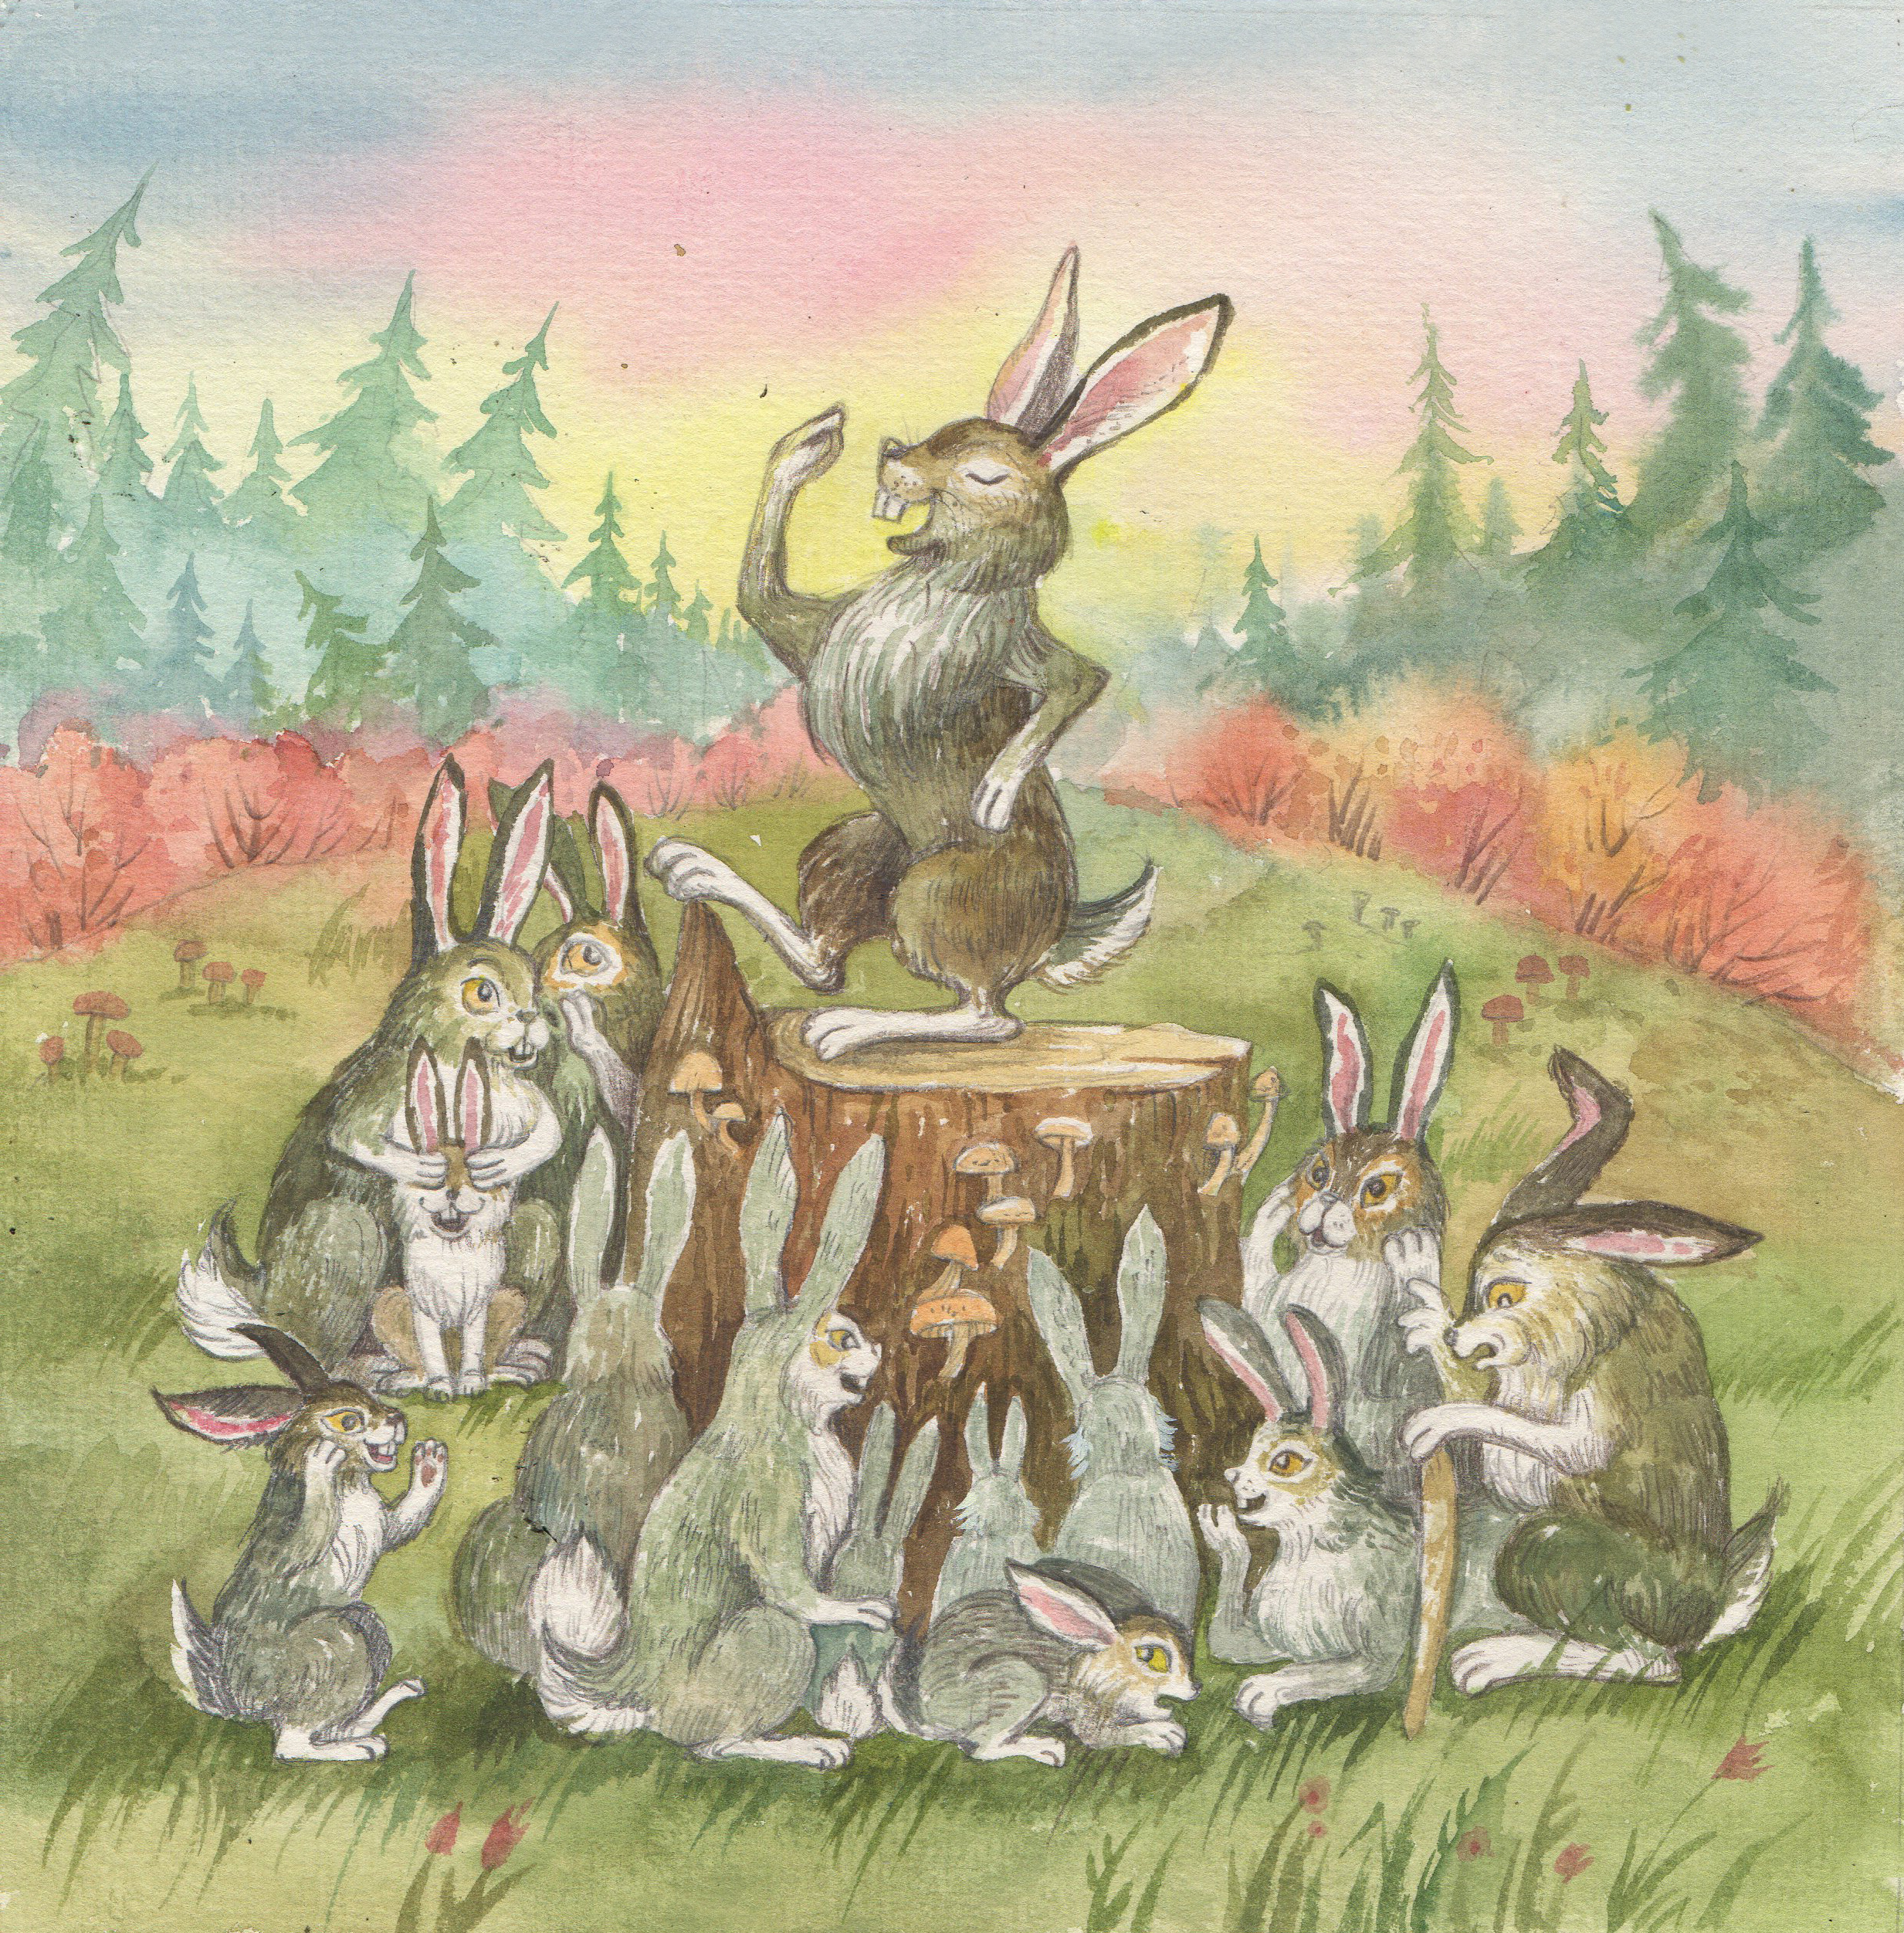 У зайца хвост короткий а уши. Храбрый заяц мамин Сибиряк. Храбрый заяц длинные уши. Про храброго зайца длинные уши косые глаза короткий хвост. Сказка про храброго зайца - длинные уши, косые глаза, короткий хвост.